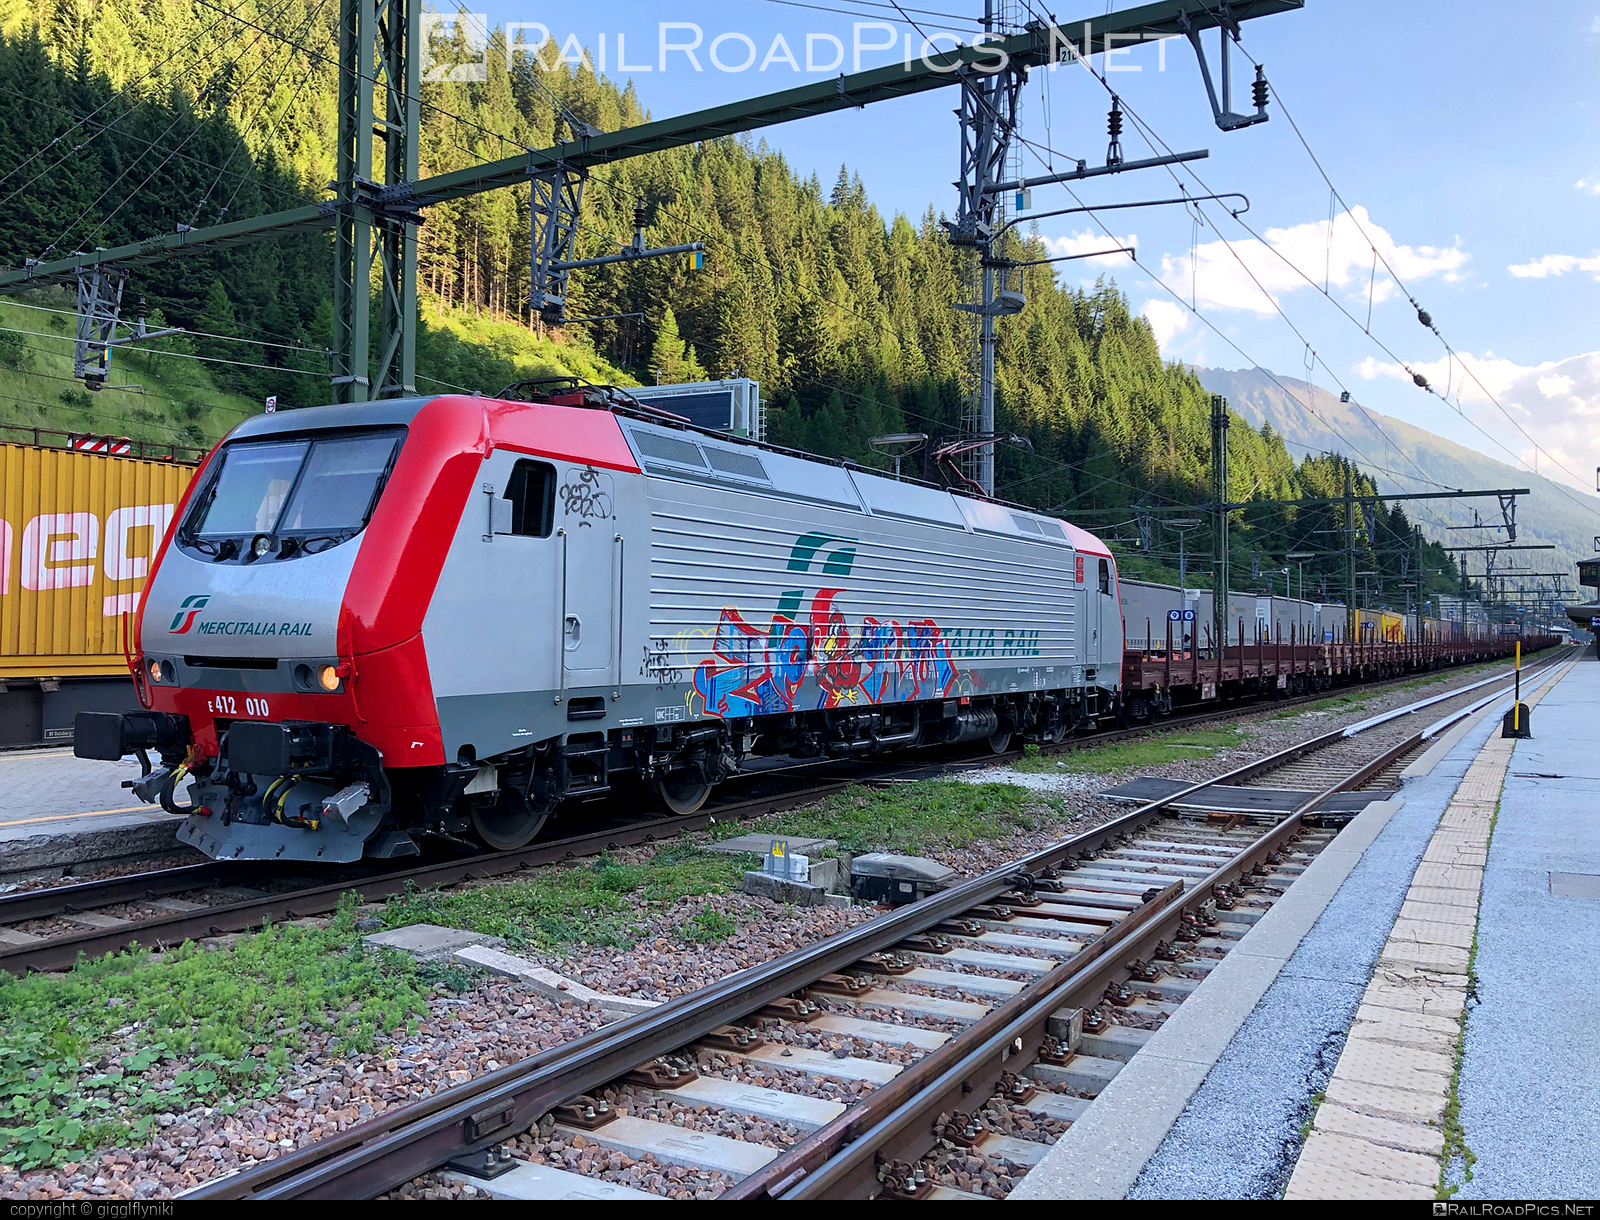 FS Class E.412 - E412 010 operated by Mercitalia Rail S.r.l. #e412 #ferroviedellostato #flatwagon #fs #fsClassE412 #fsitaliane #graffiti #mercitalia